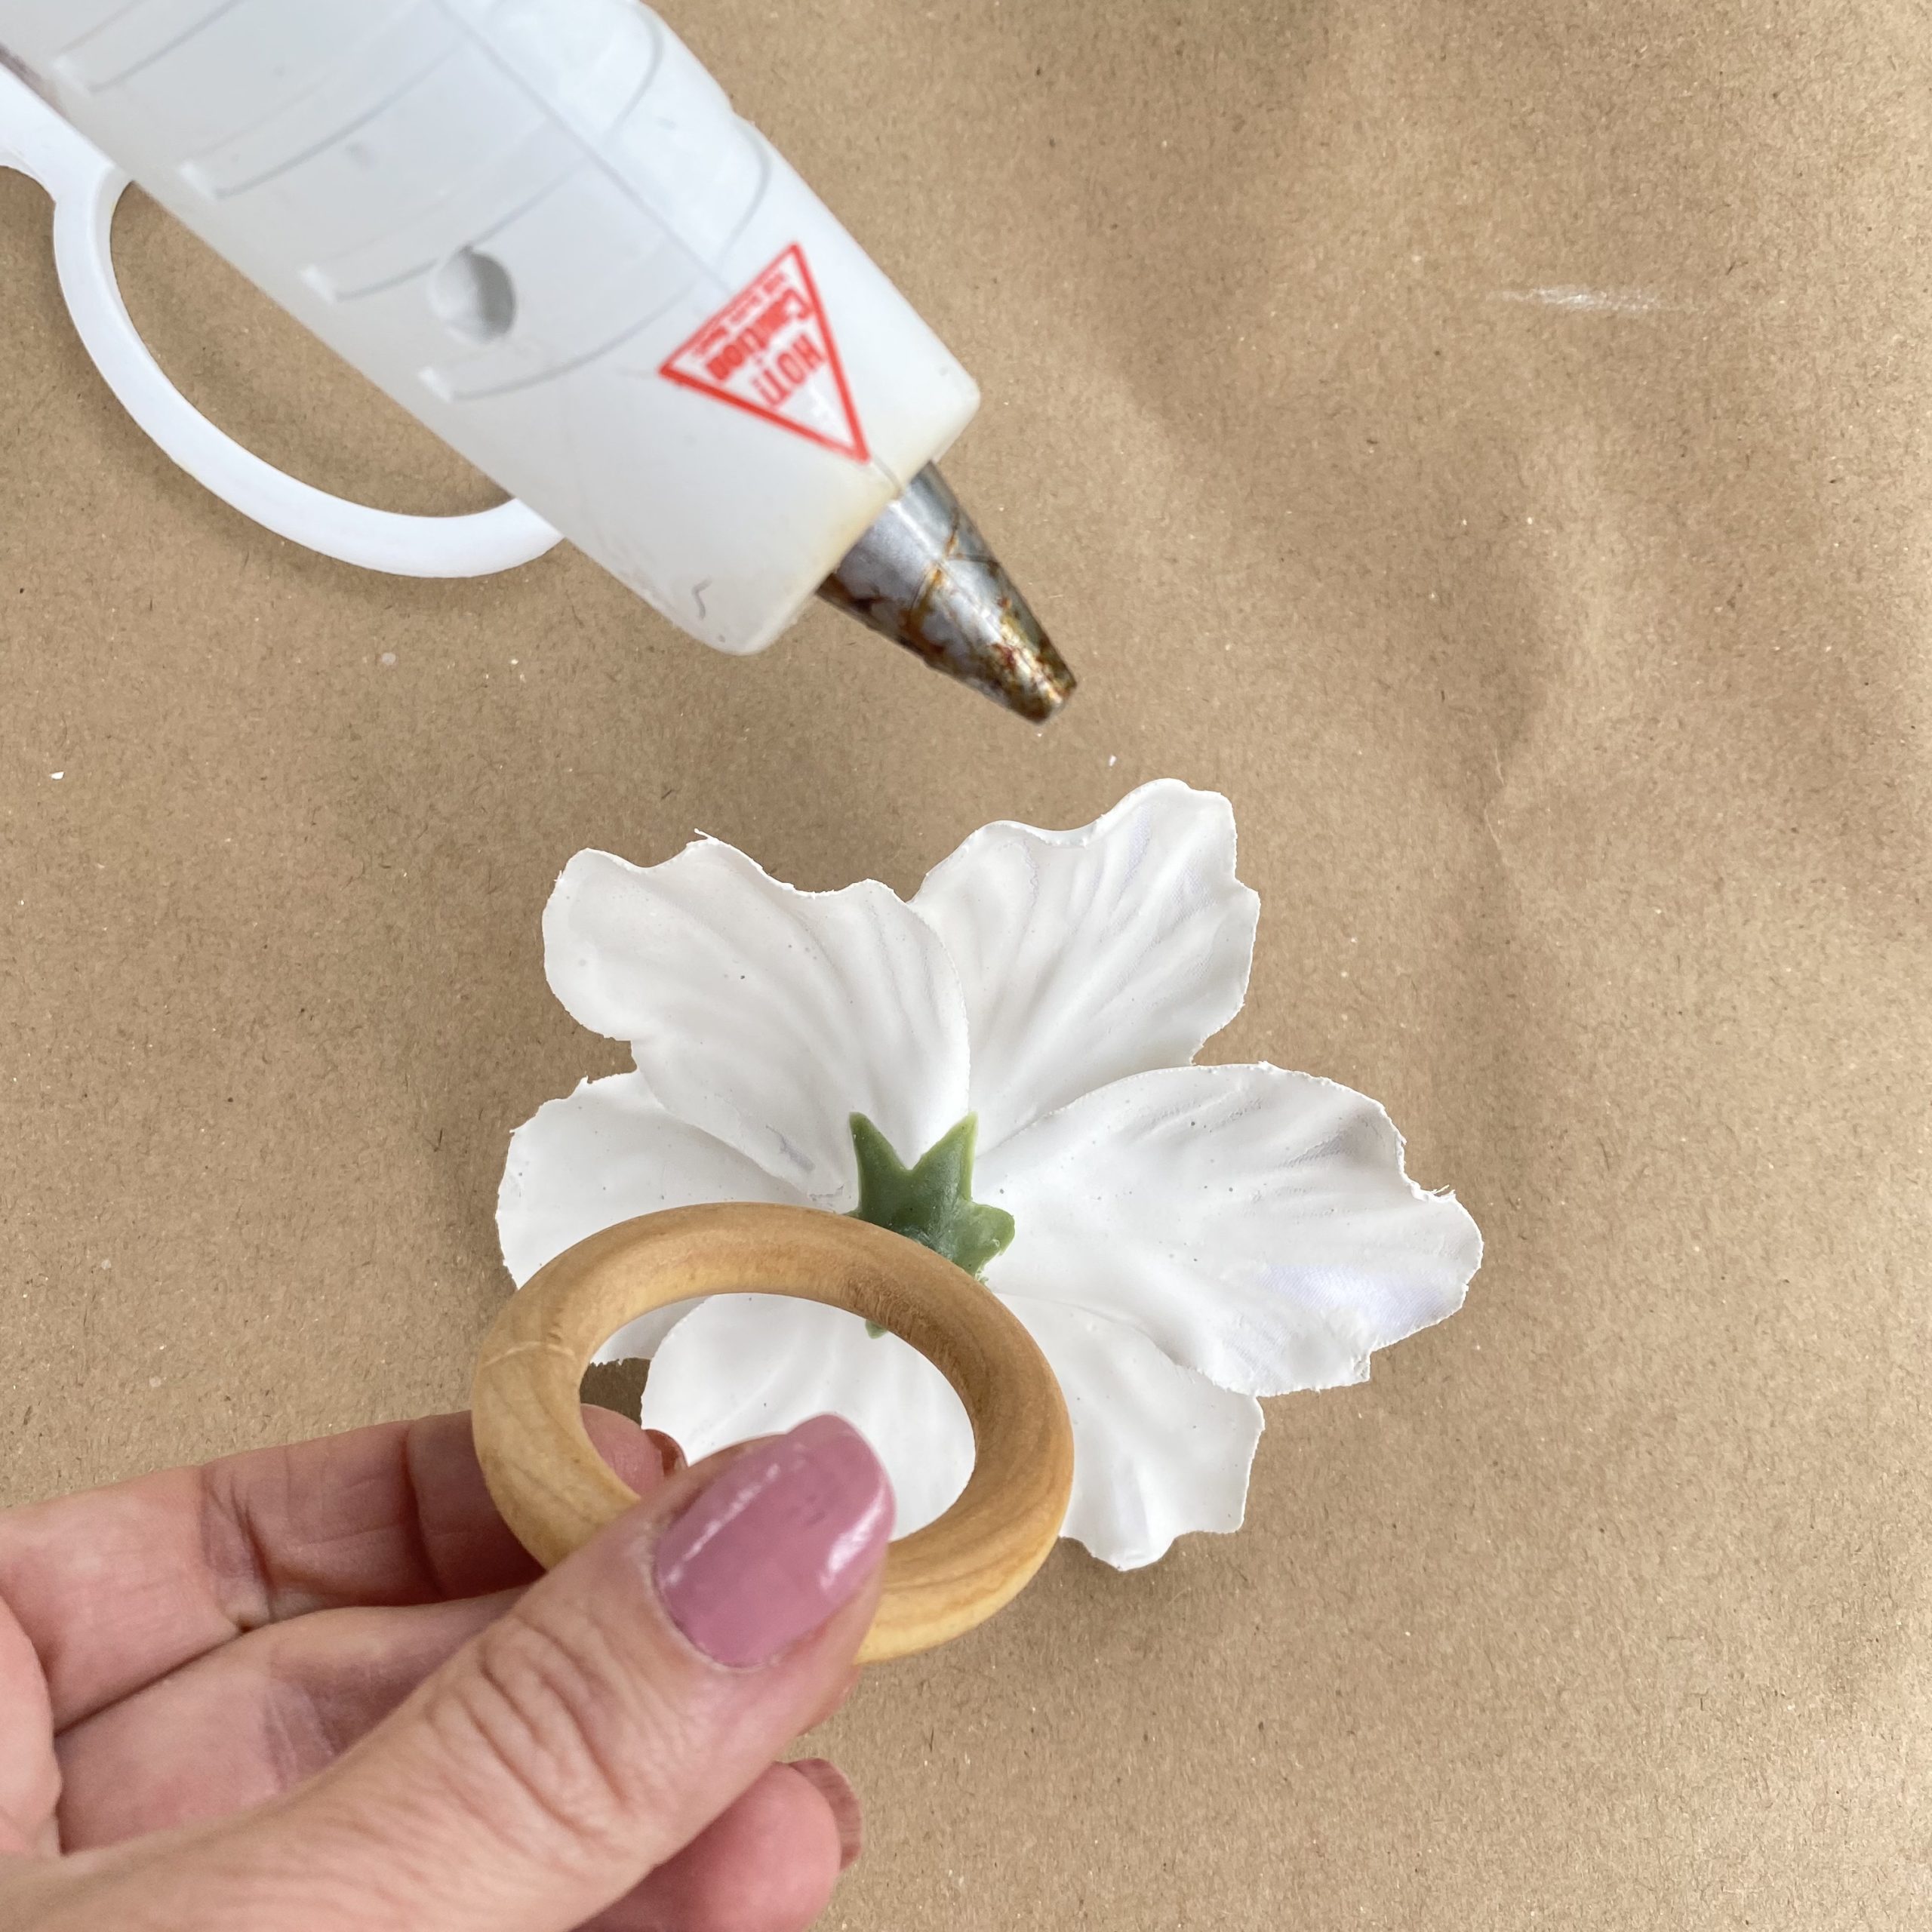 Hot gluing the napkin ring onto the plaster of paris flower.